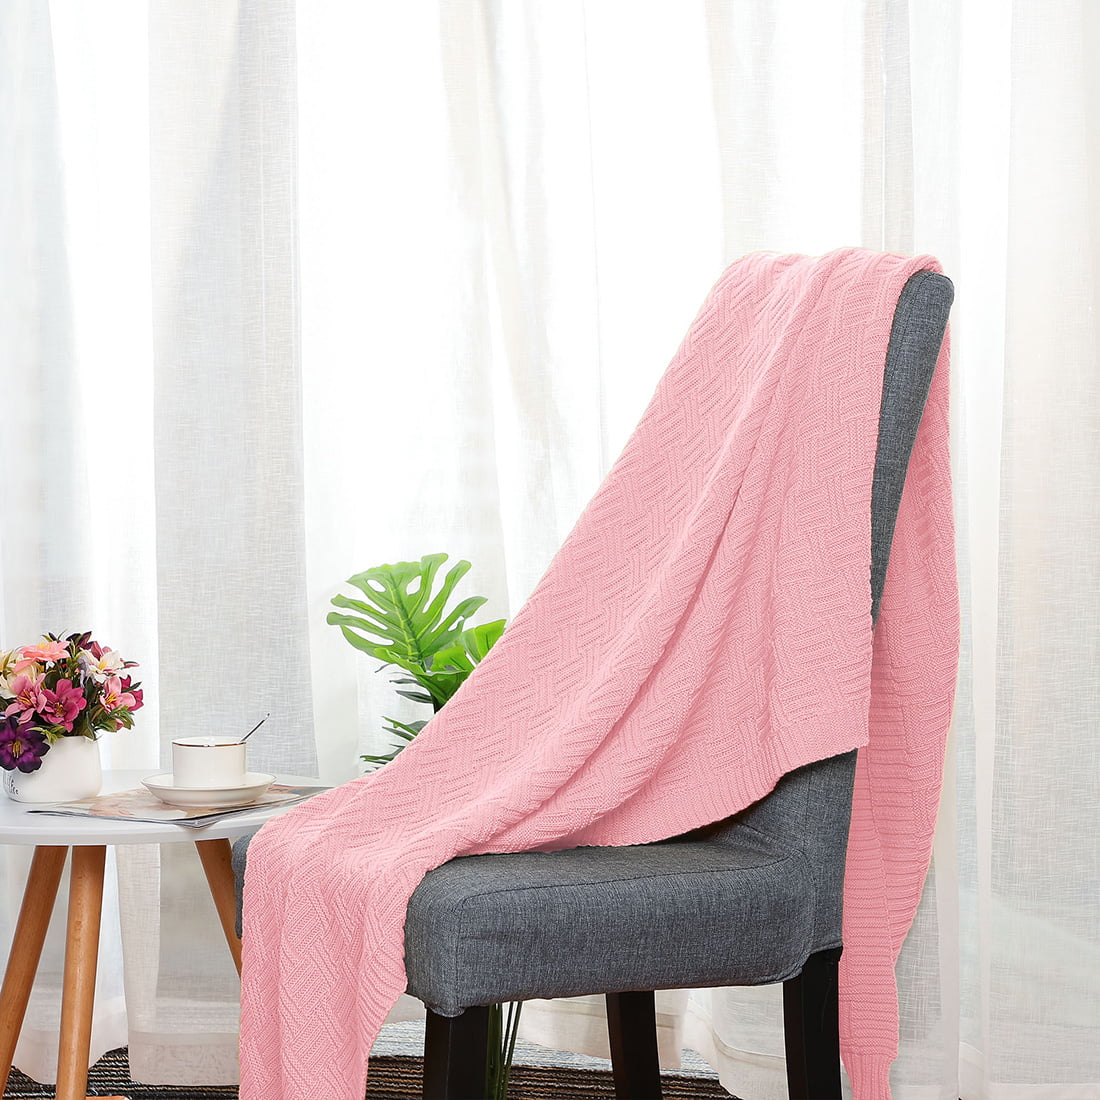 Light pink throw blanket